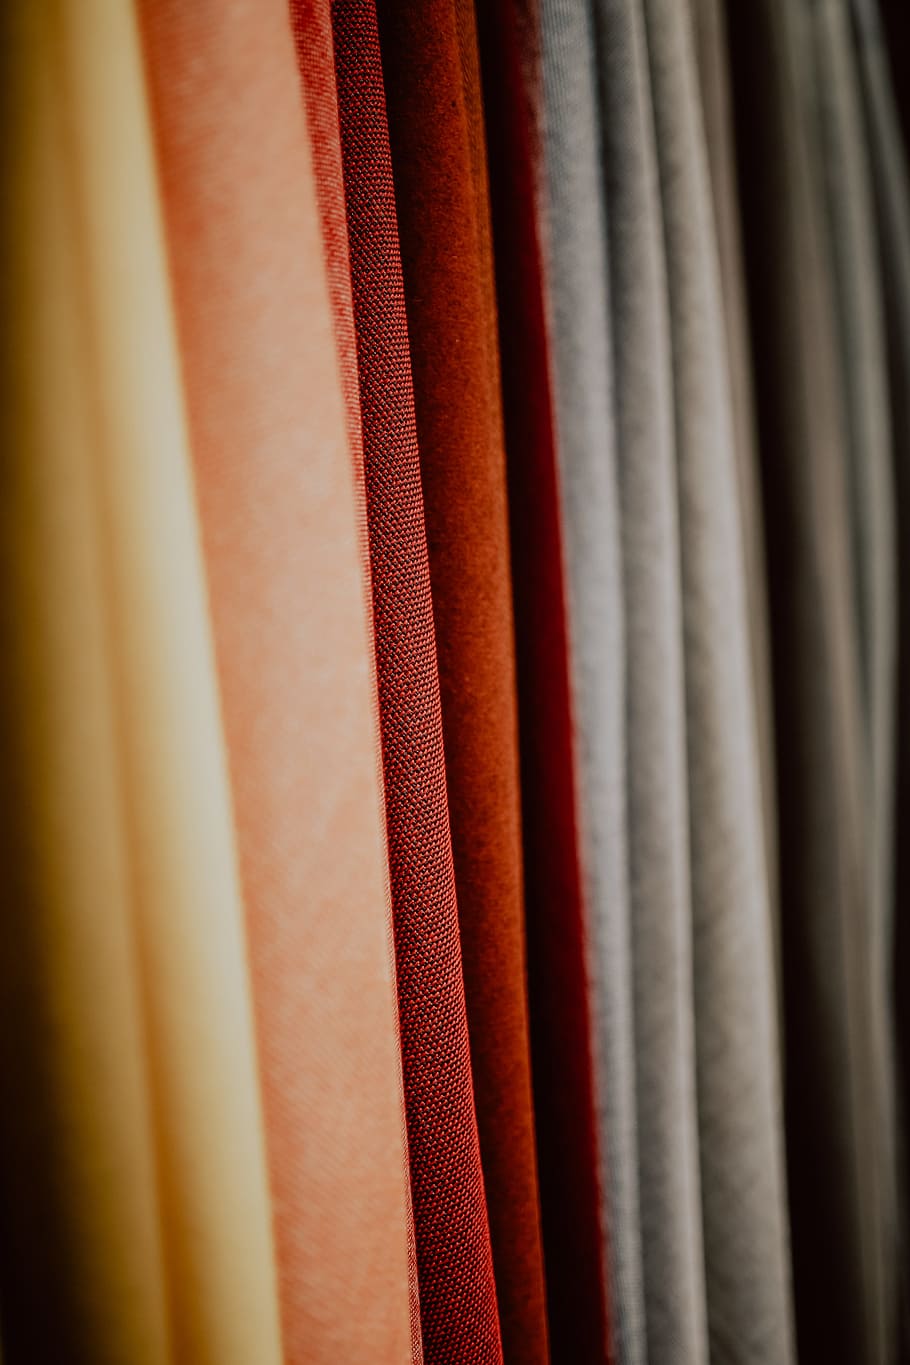 berwarna-warni, sampel kain pelapis, bahan, tekstil, gorden, kain, tirai, tidak ada orang, close-up, di dalam ruangan